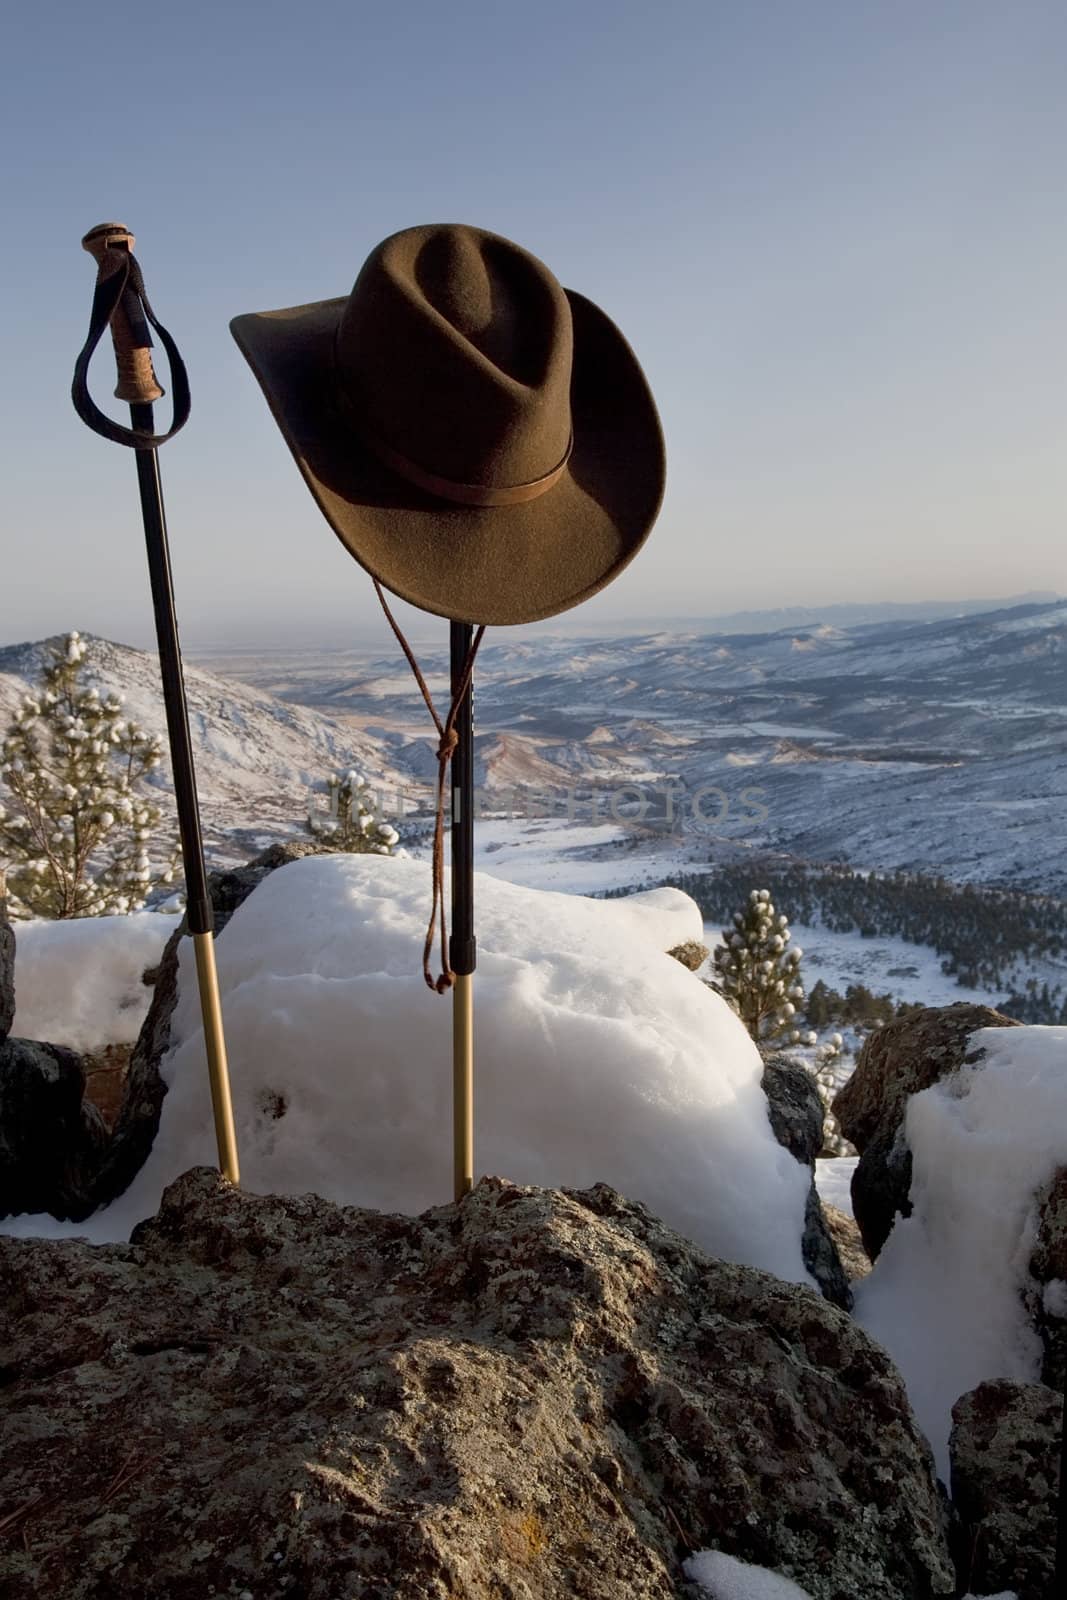 trekking poles and hat in mountain scenery by PixelsAway